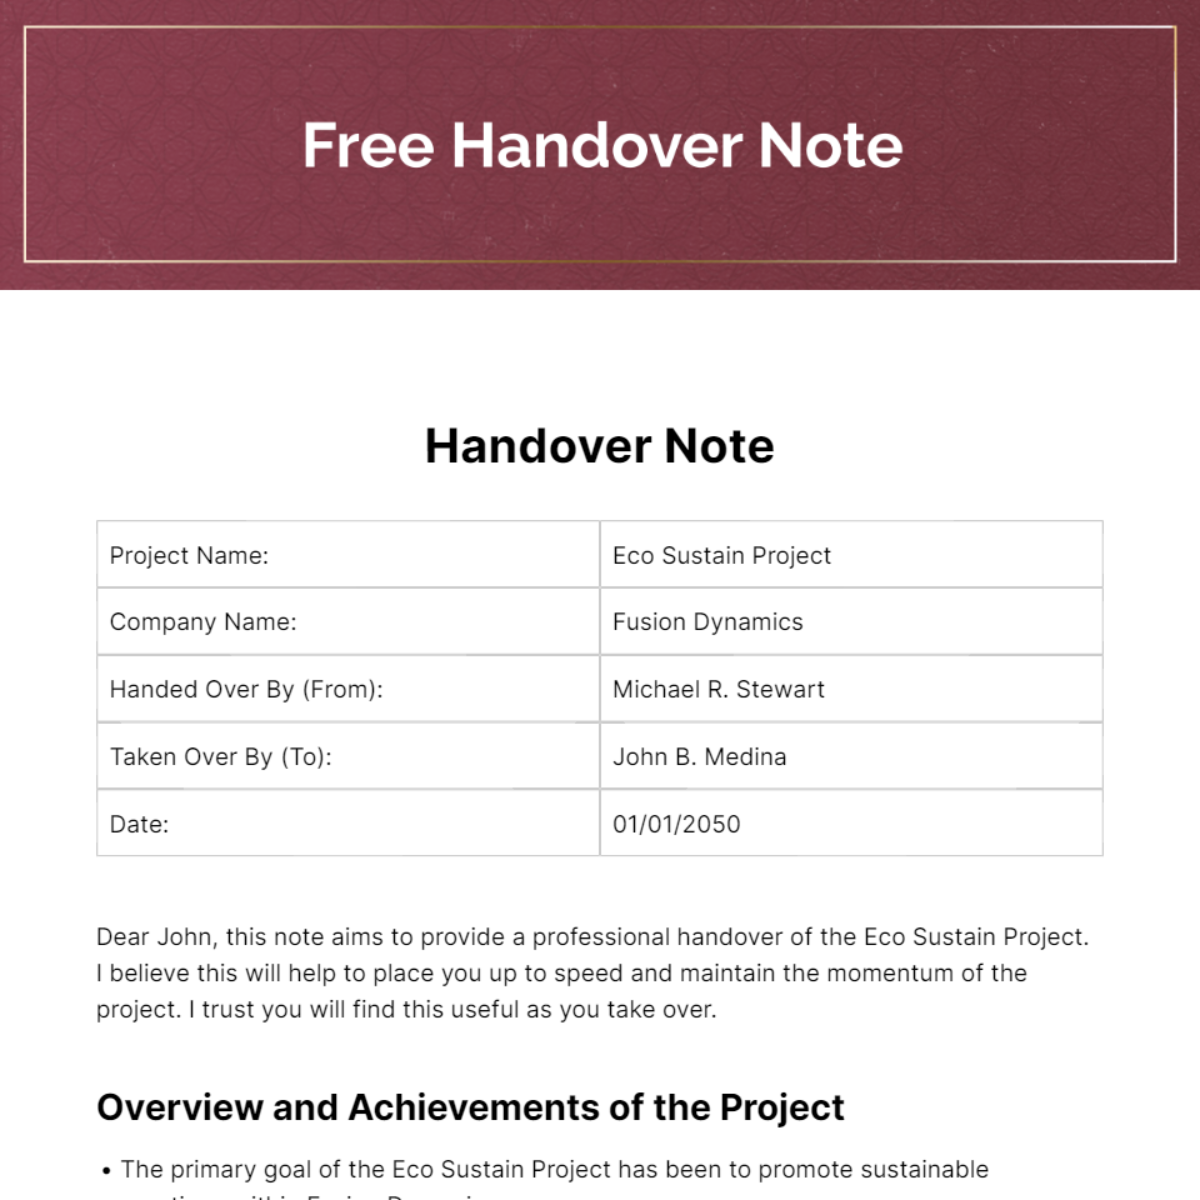 Free Handover Note Template